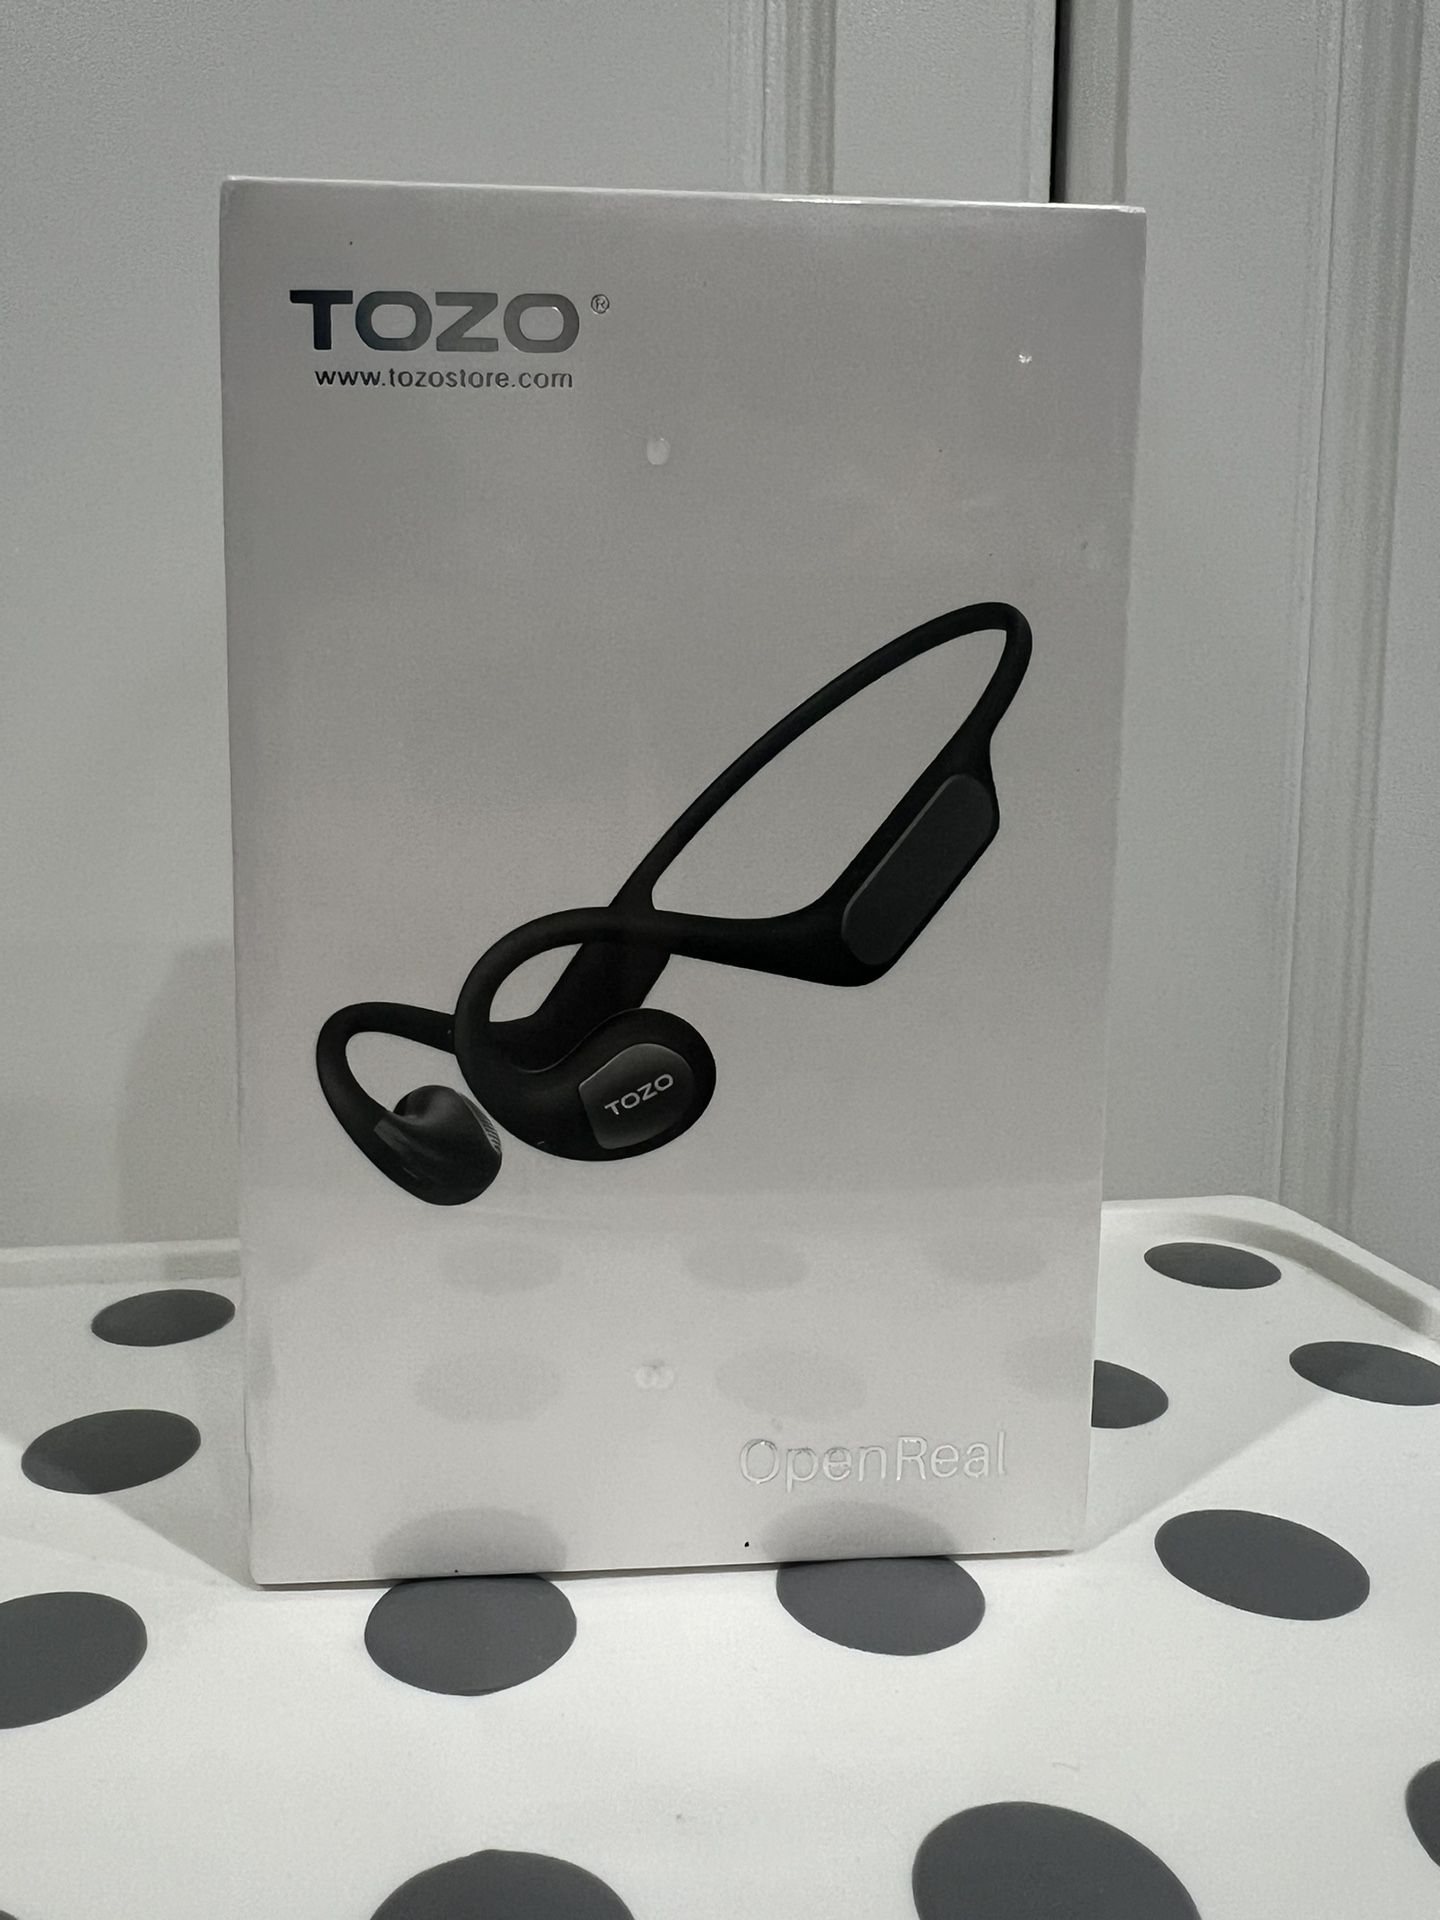 Tozo OpenReal Open Ear Bluetooth Headphones